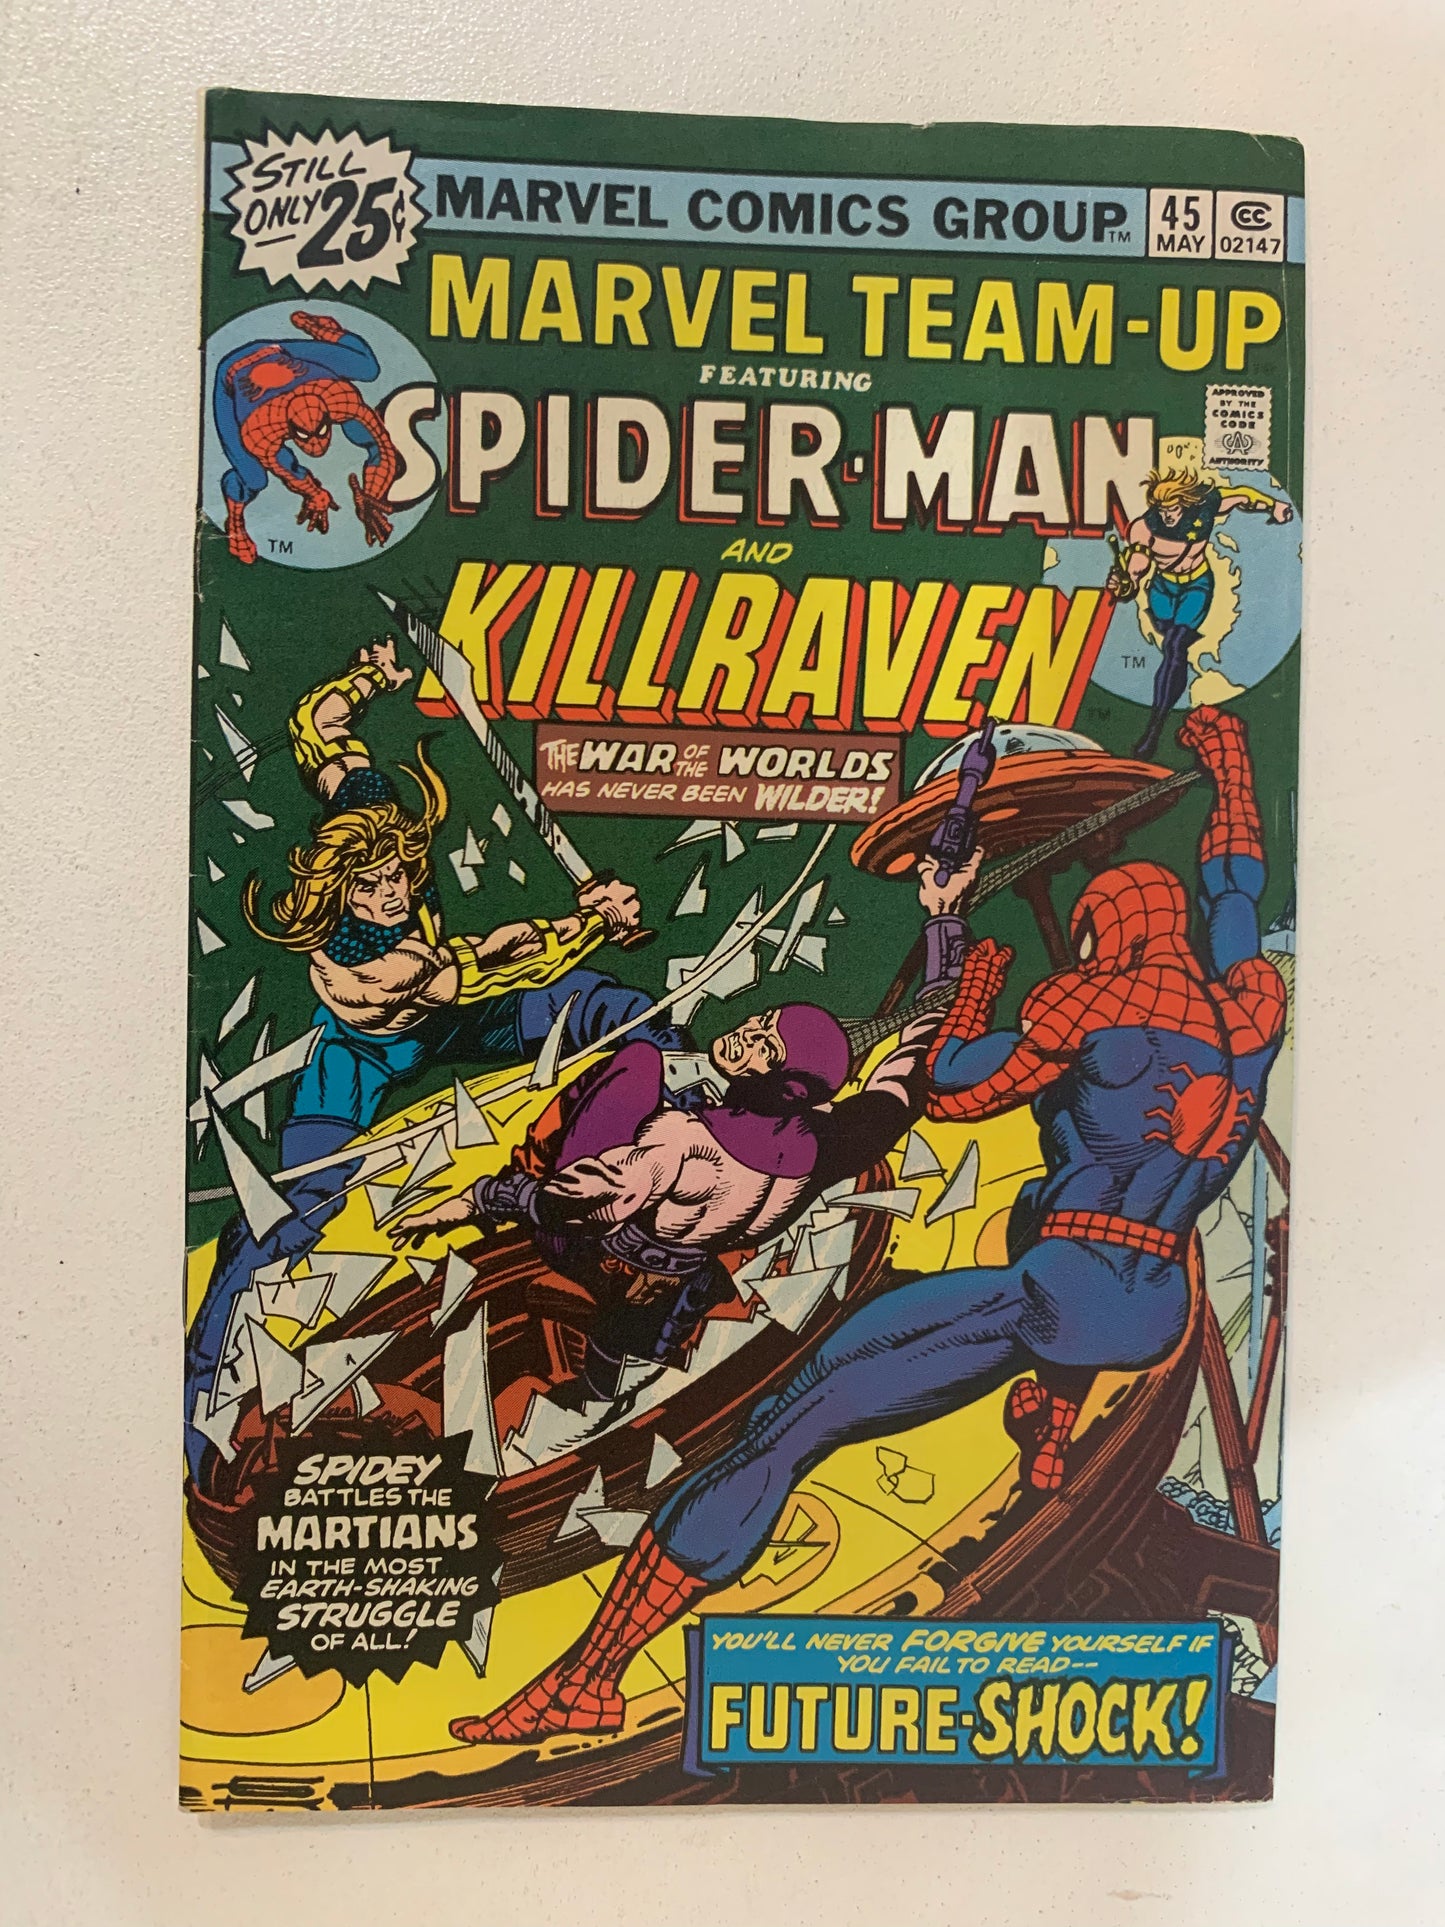 Marvel Team-Up #45